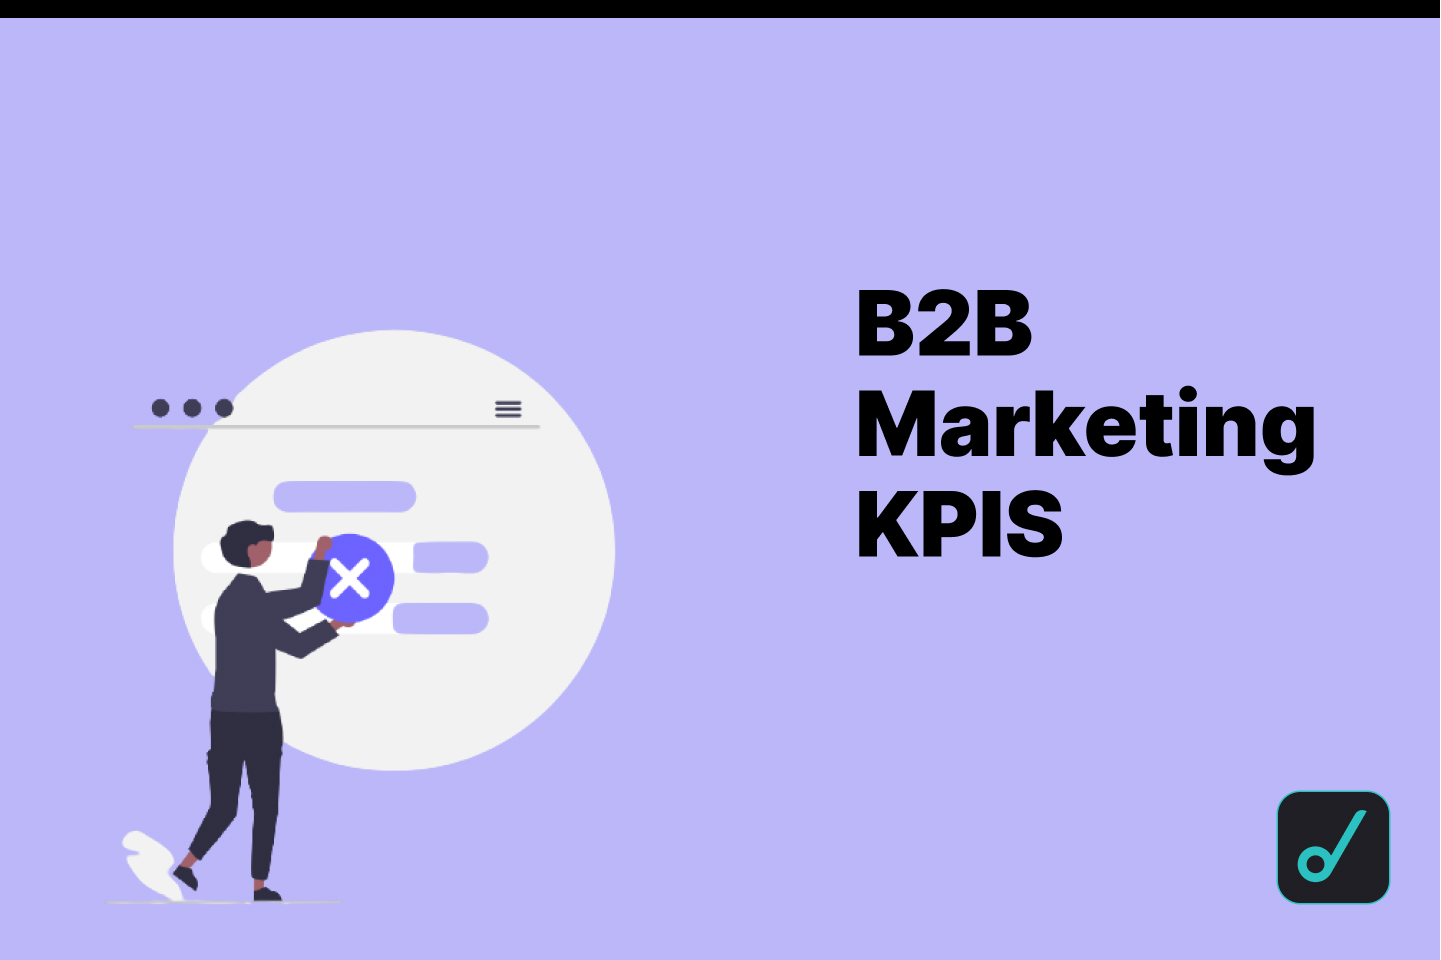 B2B Marketing KPIs You MUST Track